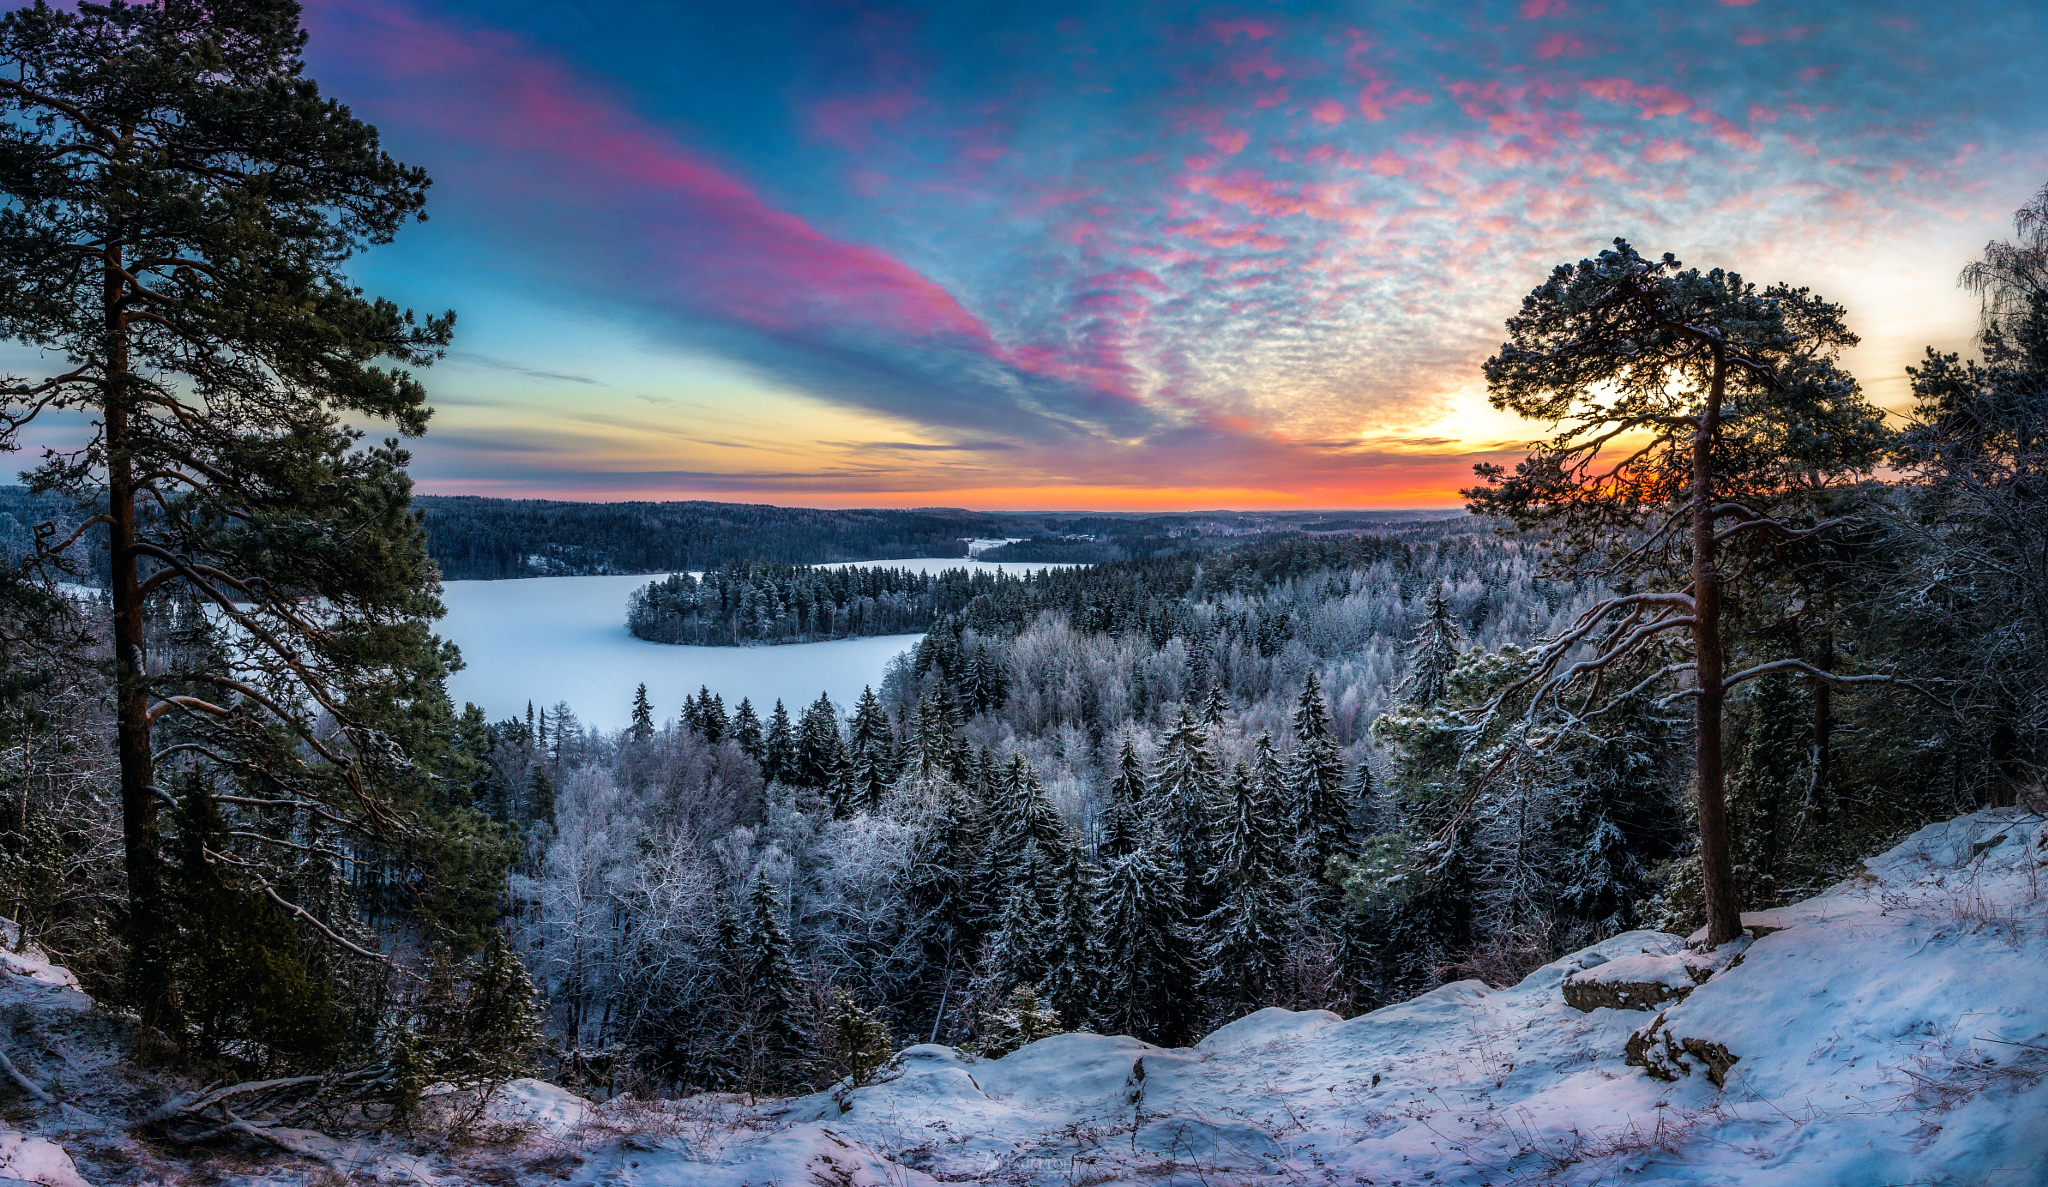 1500797 скачать картинку зима, лес, земля/природа, финляндия, горизонт, озеро, небо, закат солнца - обои и заставки бесплатно